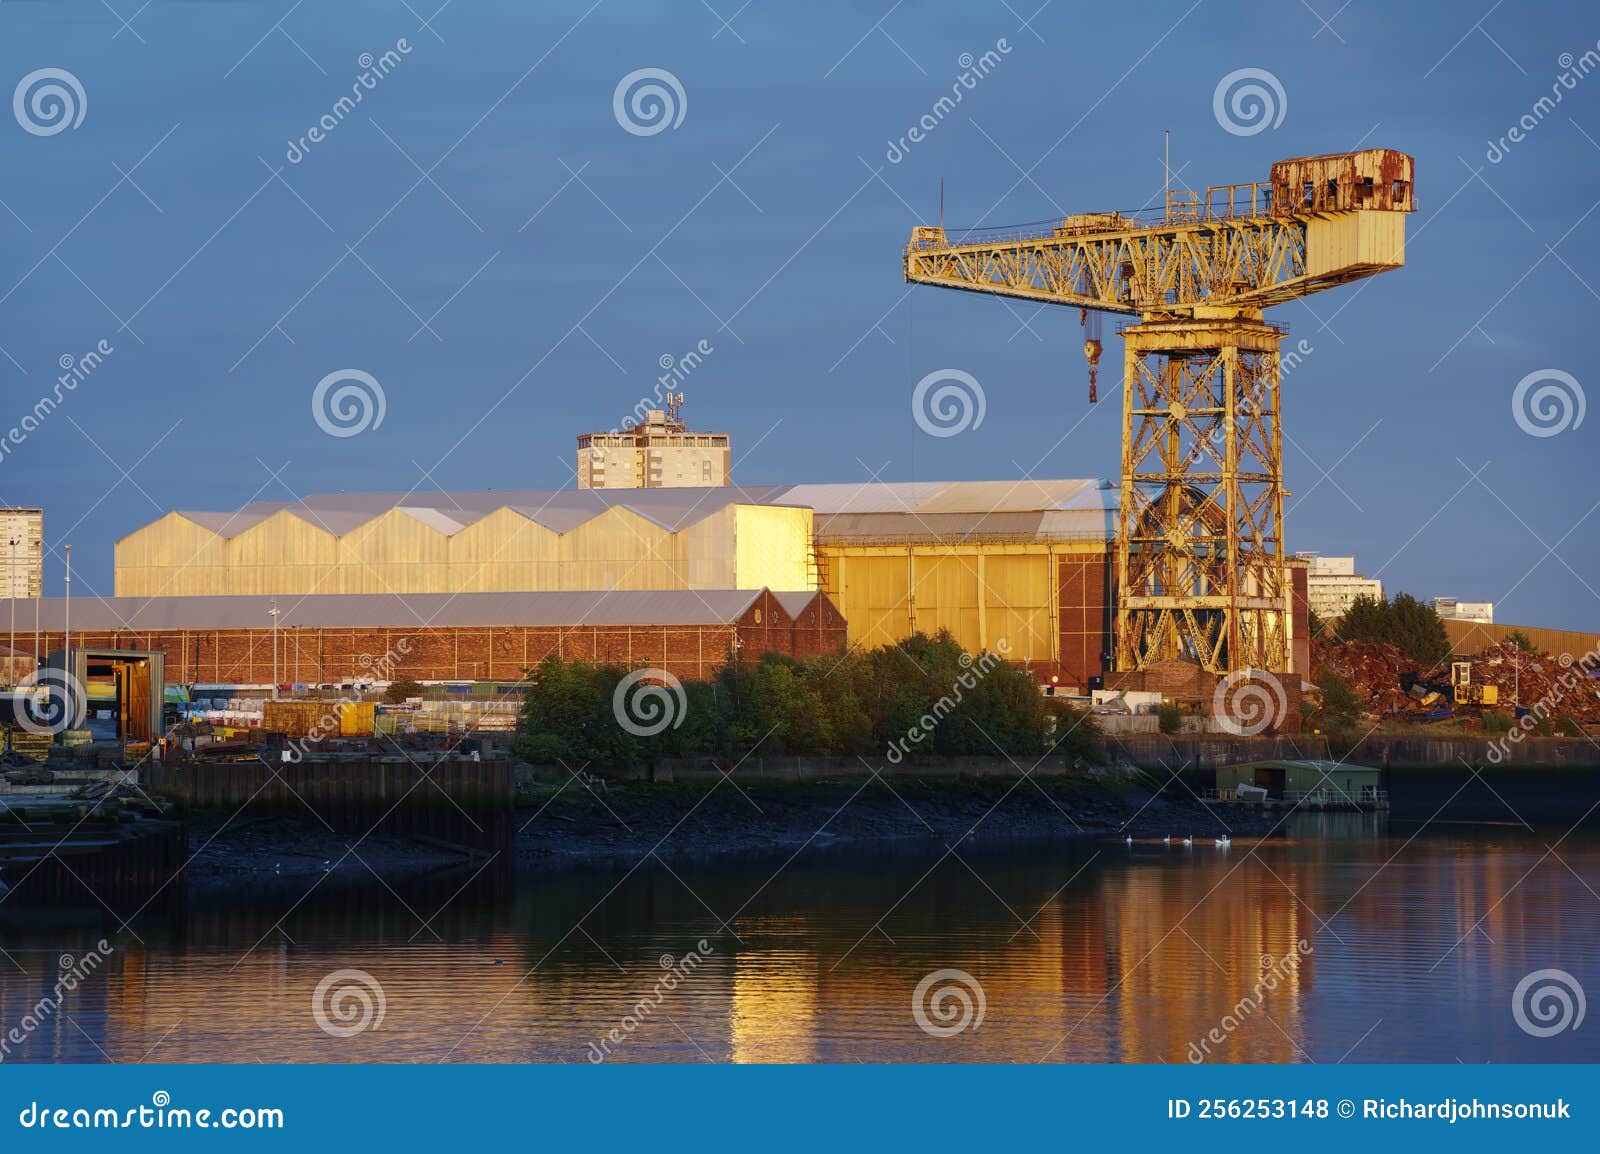 shipbuilding crane in historical govan glasgow scotland